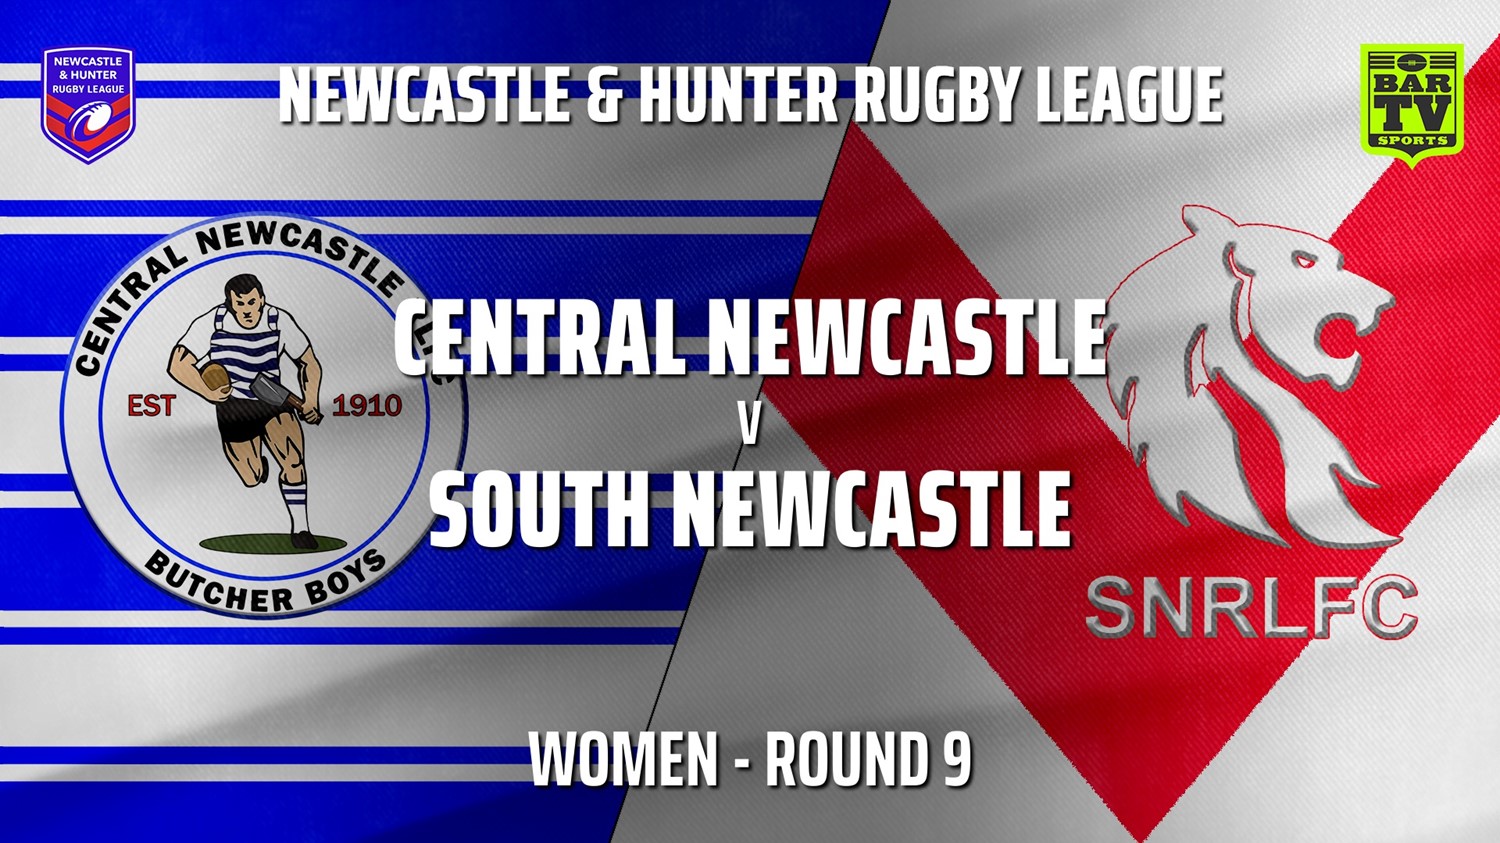 210606-NHRL Round 9 - Women - Central Newcastle v South Newcastle Slate Image